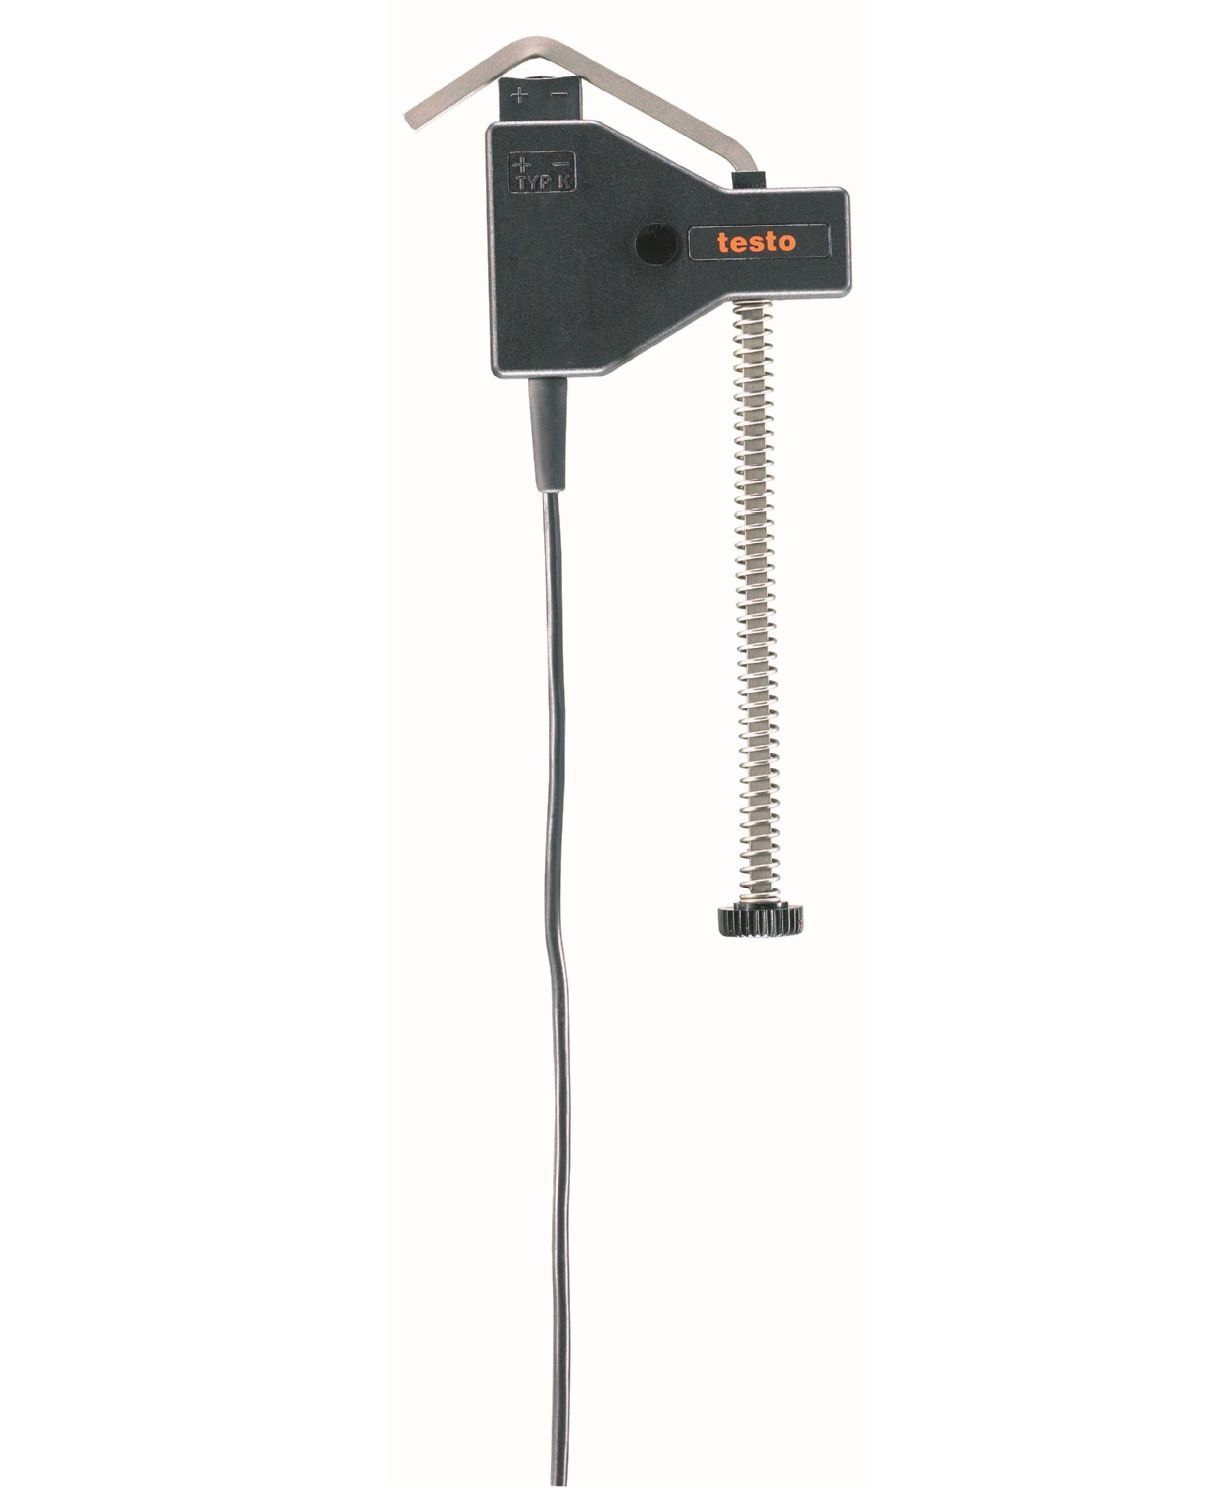 Зонд-обкрутка с сенсором температуры NTC для труб Ø 5-65 мм для Testo 440 TESTO 0615 5605 Термологгеры